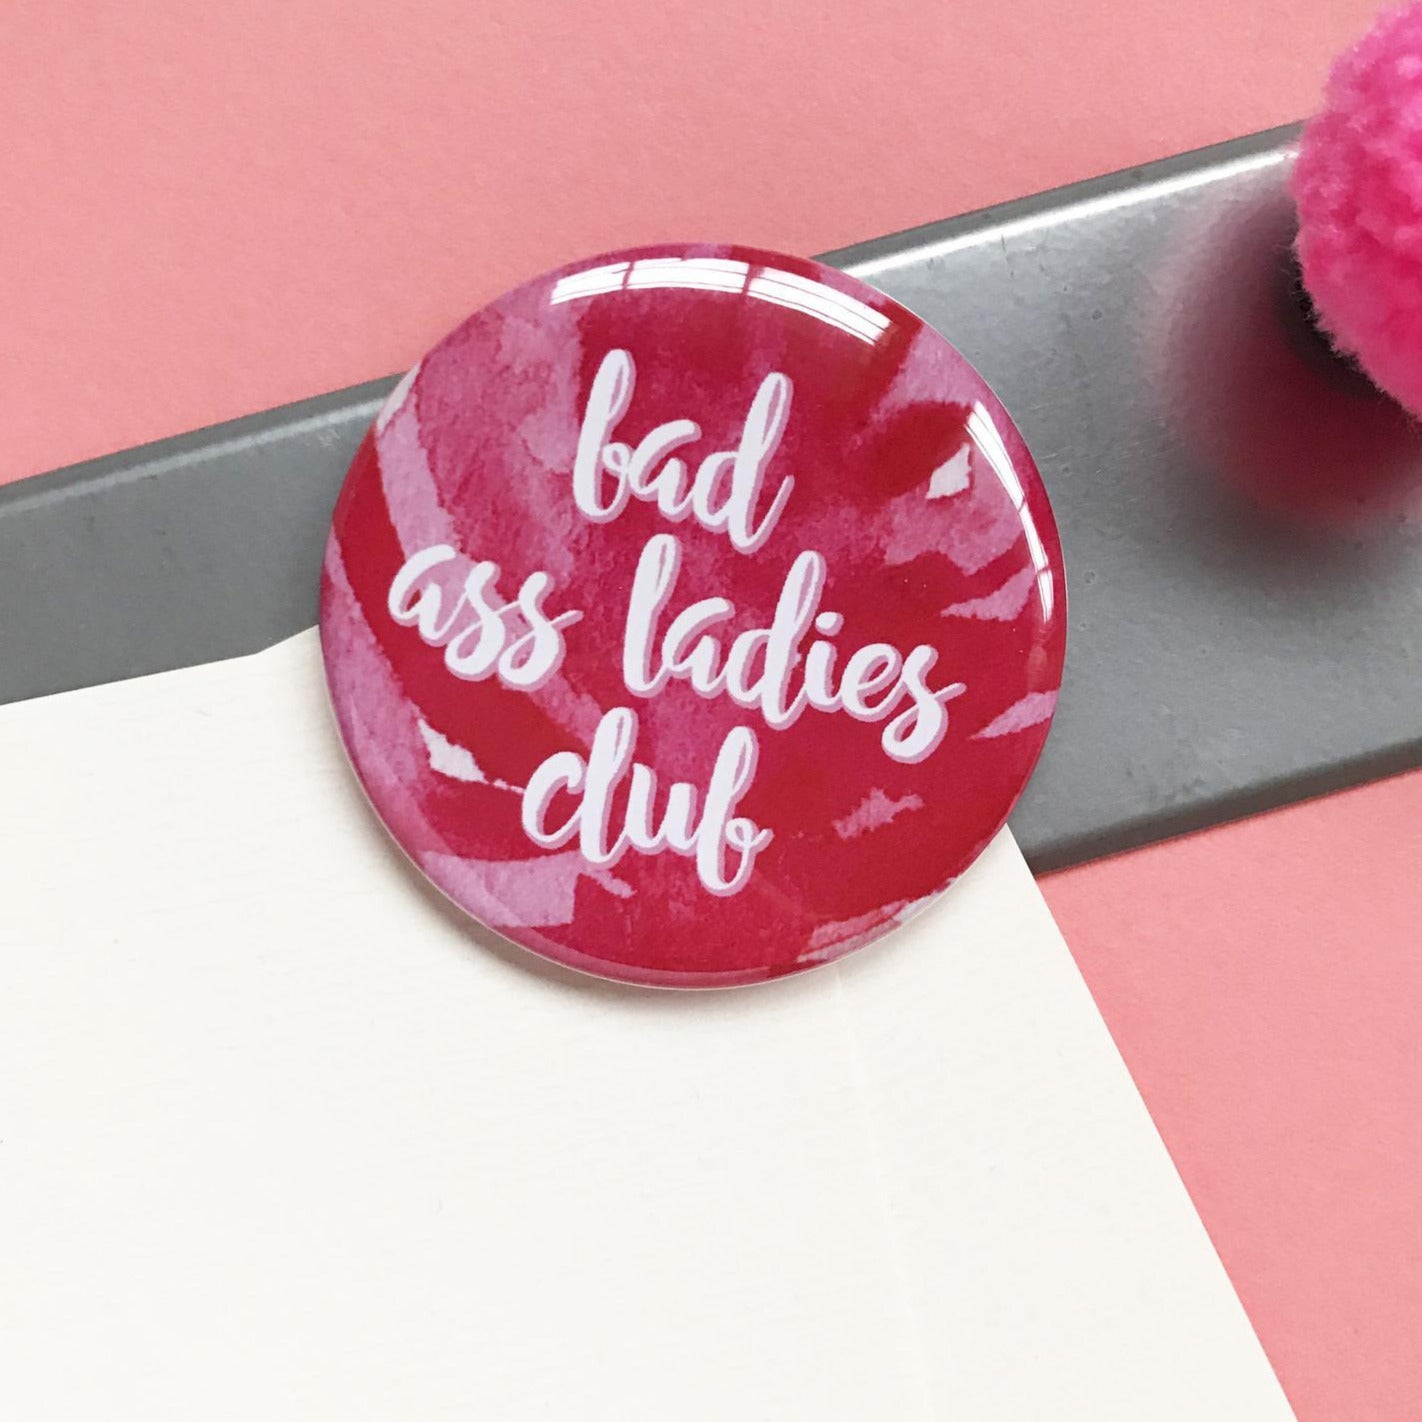 Bad Ass Ladies Club Magnet or Mirror